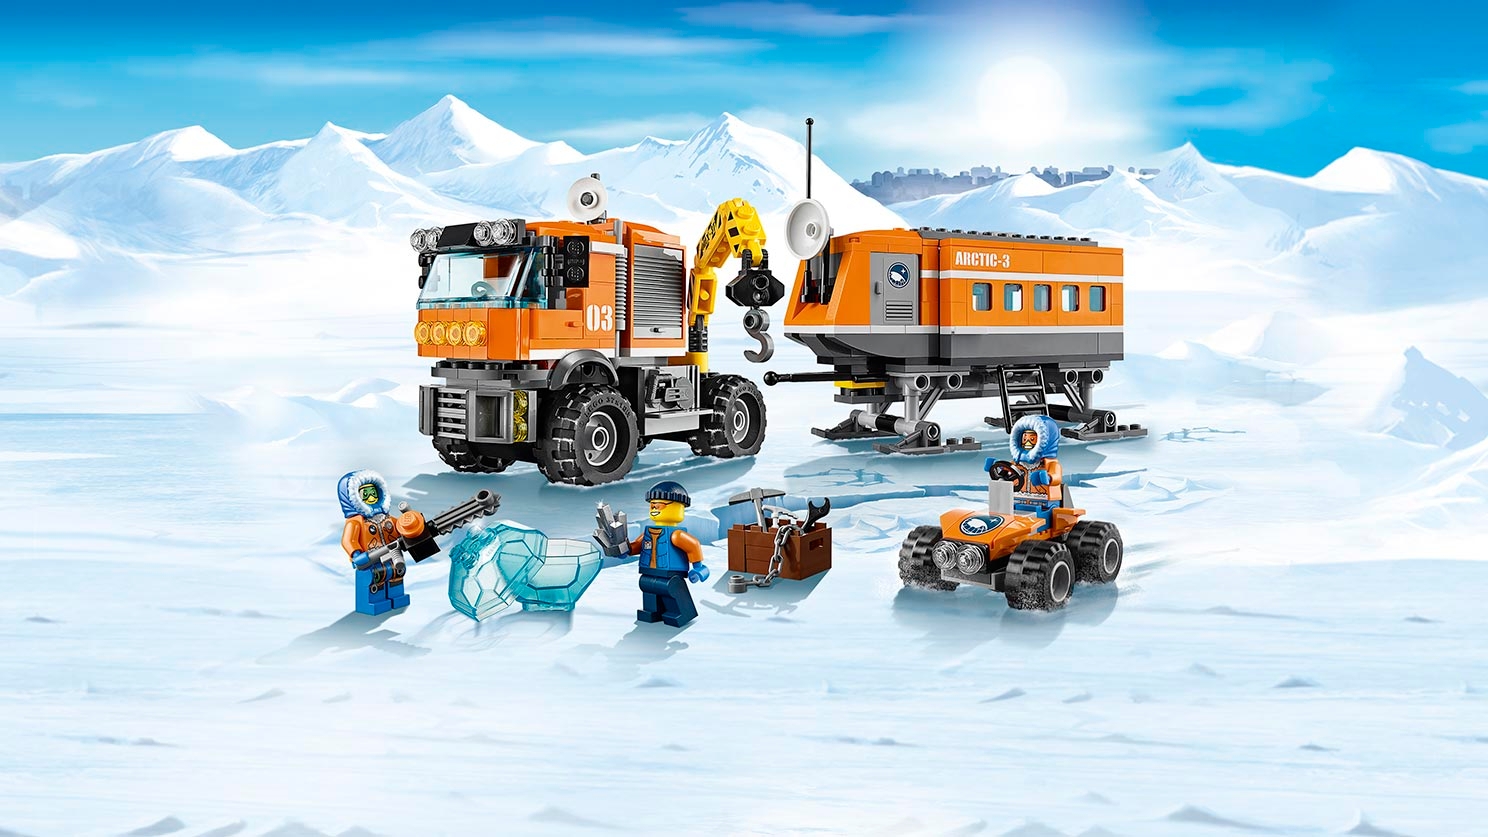 Arctic Outpost - Videos - LEGO.com for kids